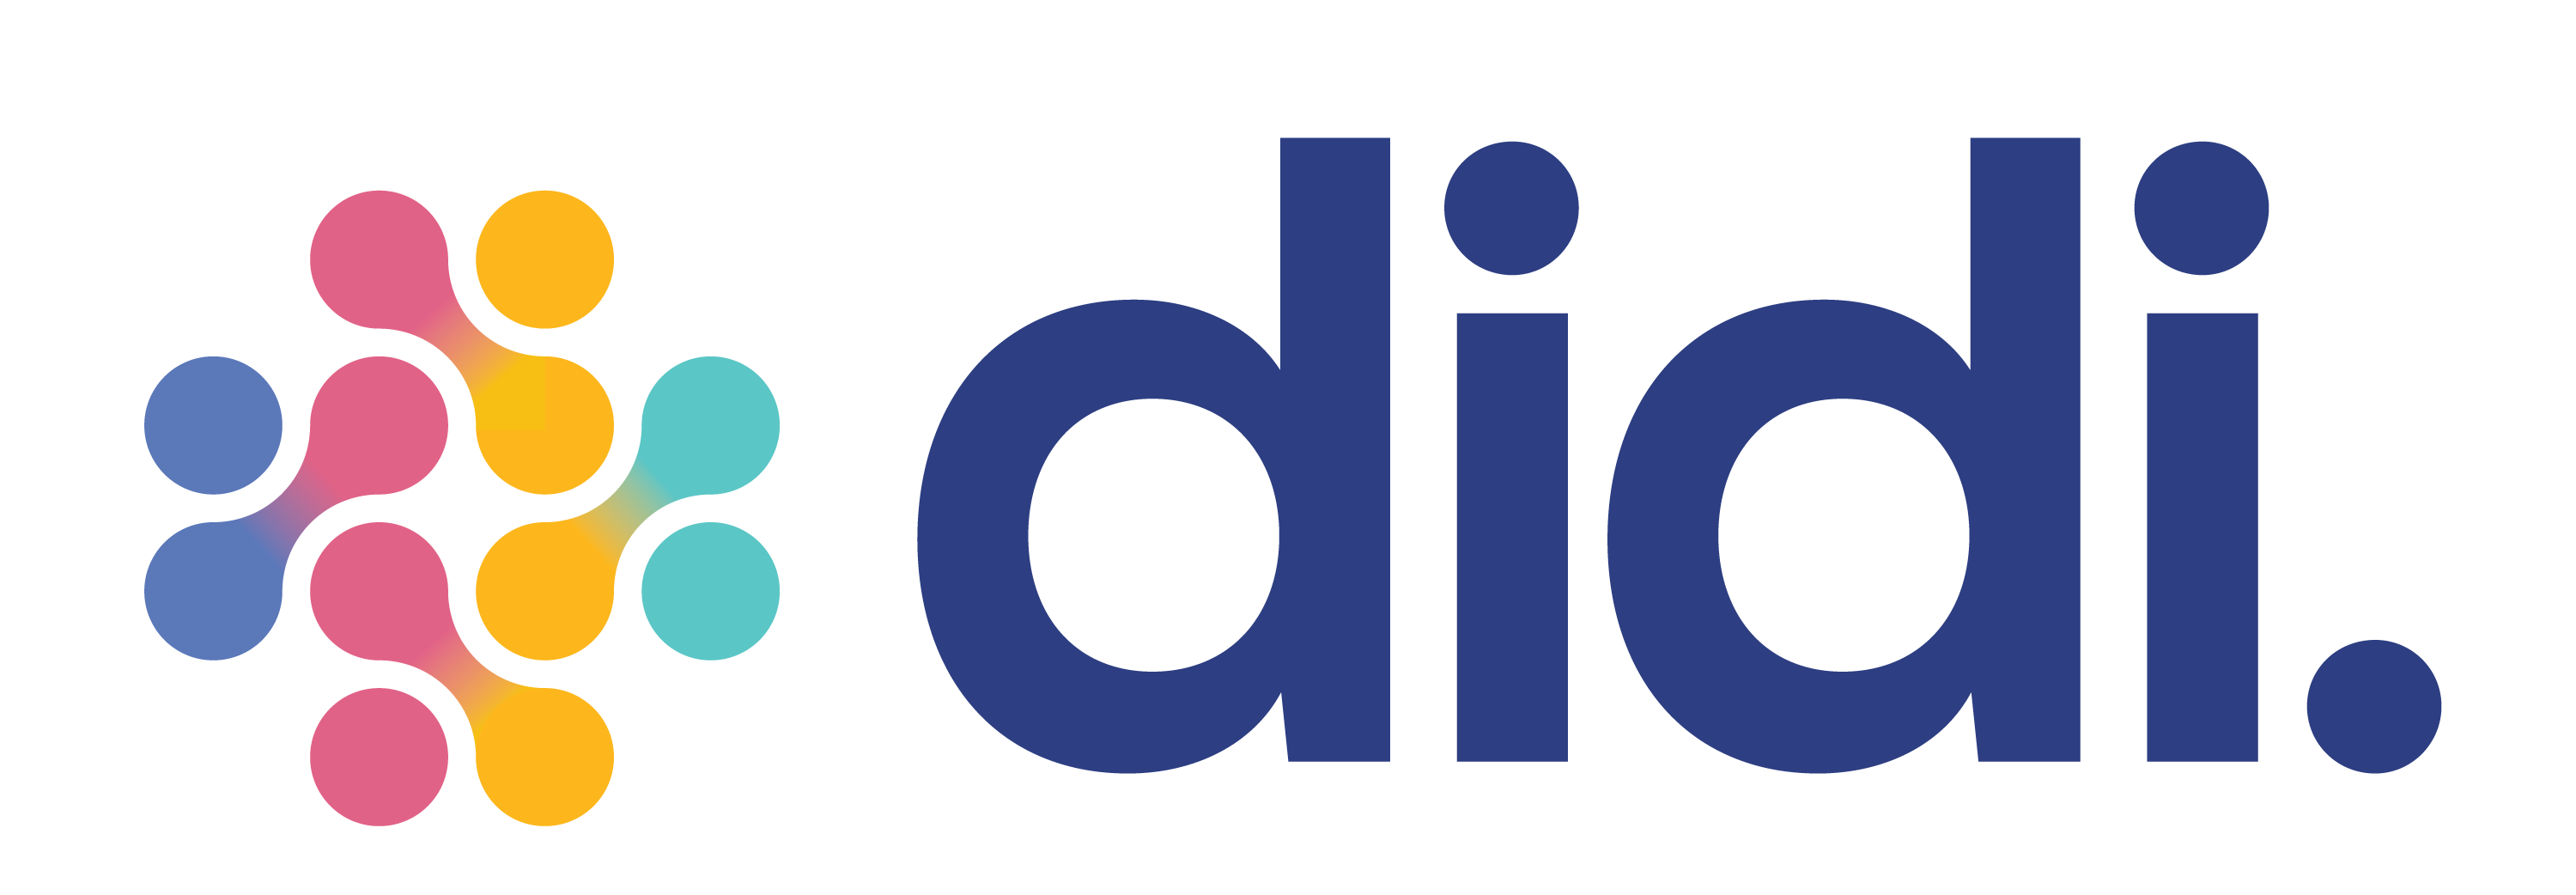 Project Didi | Innovative Use of AI/ML